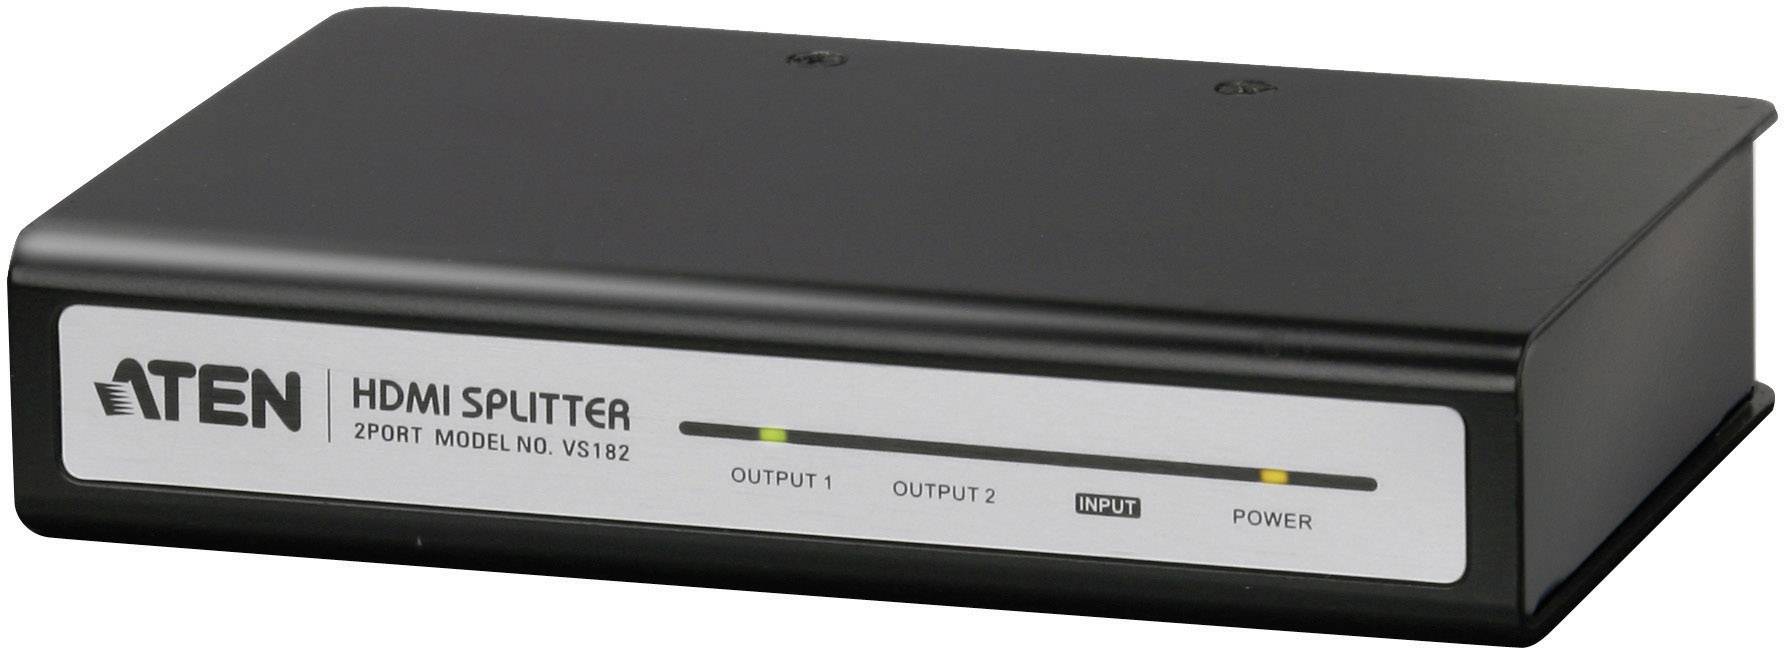 salt Risikabel Modtager ATEN VS182A-AT-G 2 ports HDMI splitter 3840 x 2160 p Black | Conrad.com